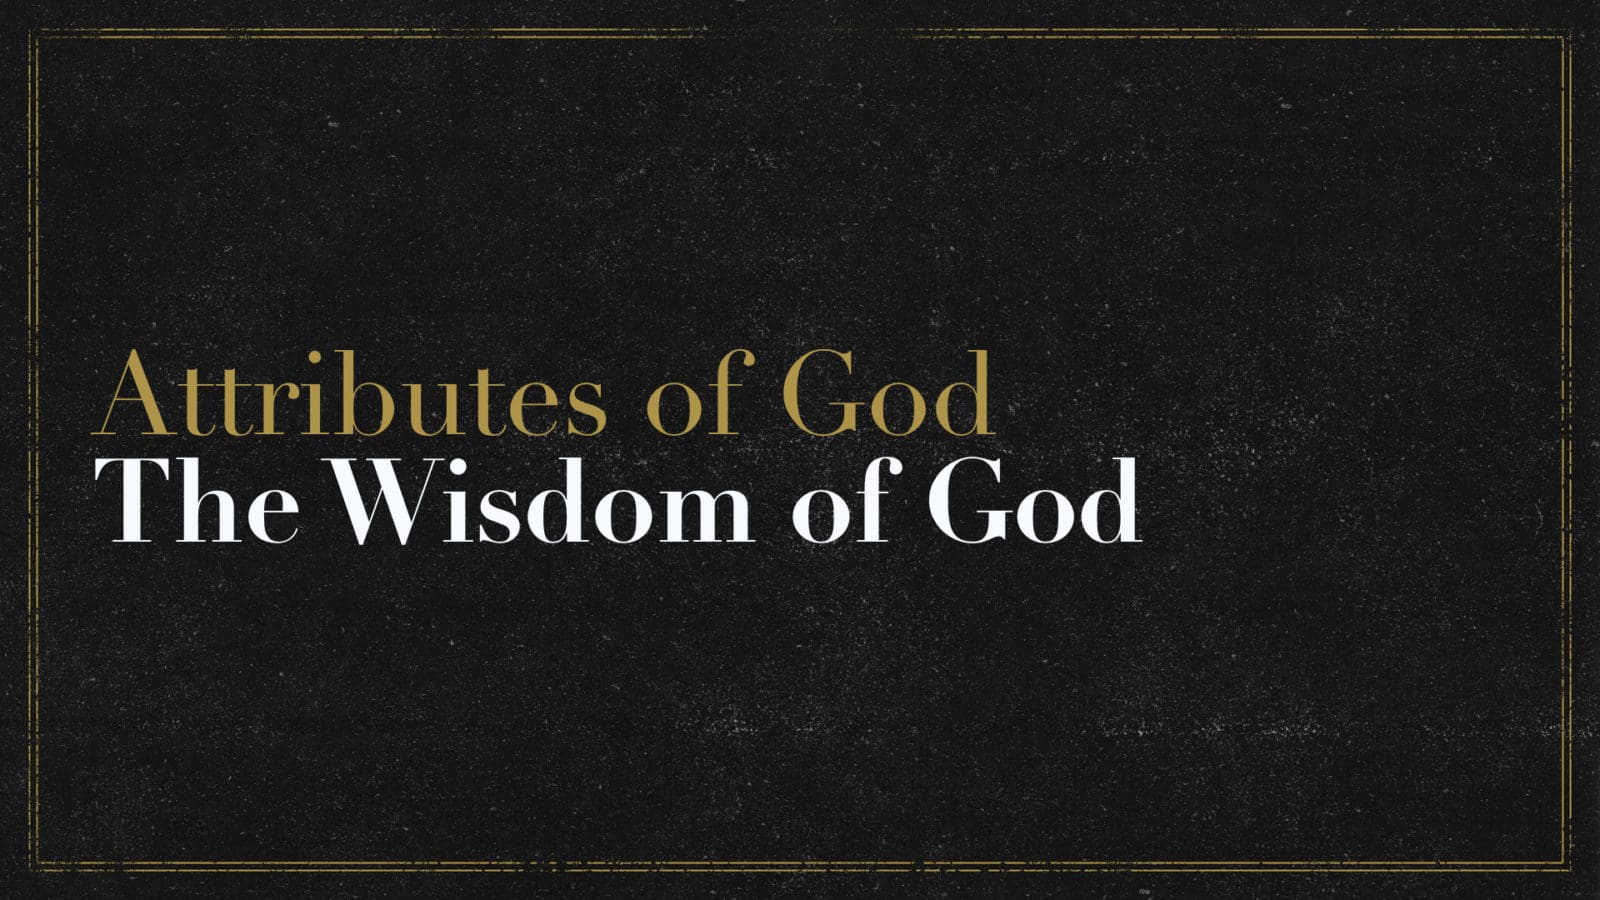 The Wisdom of God